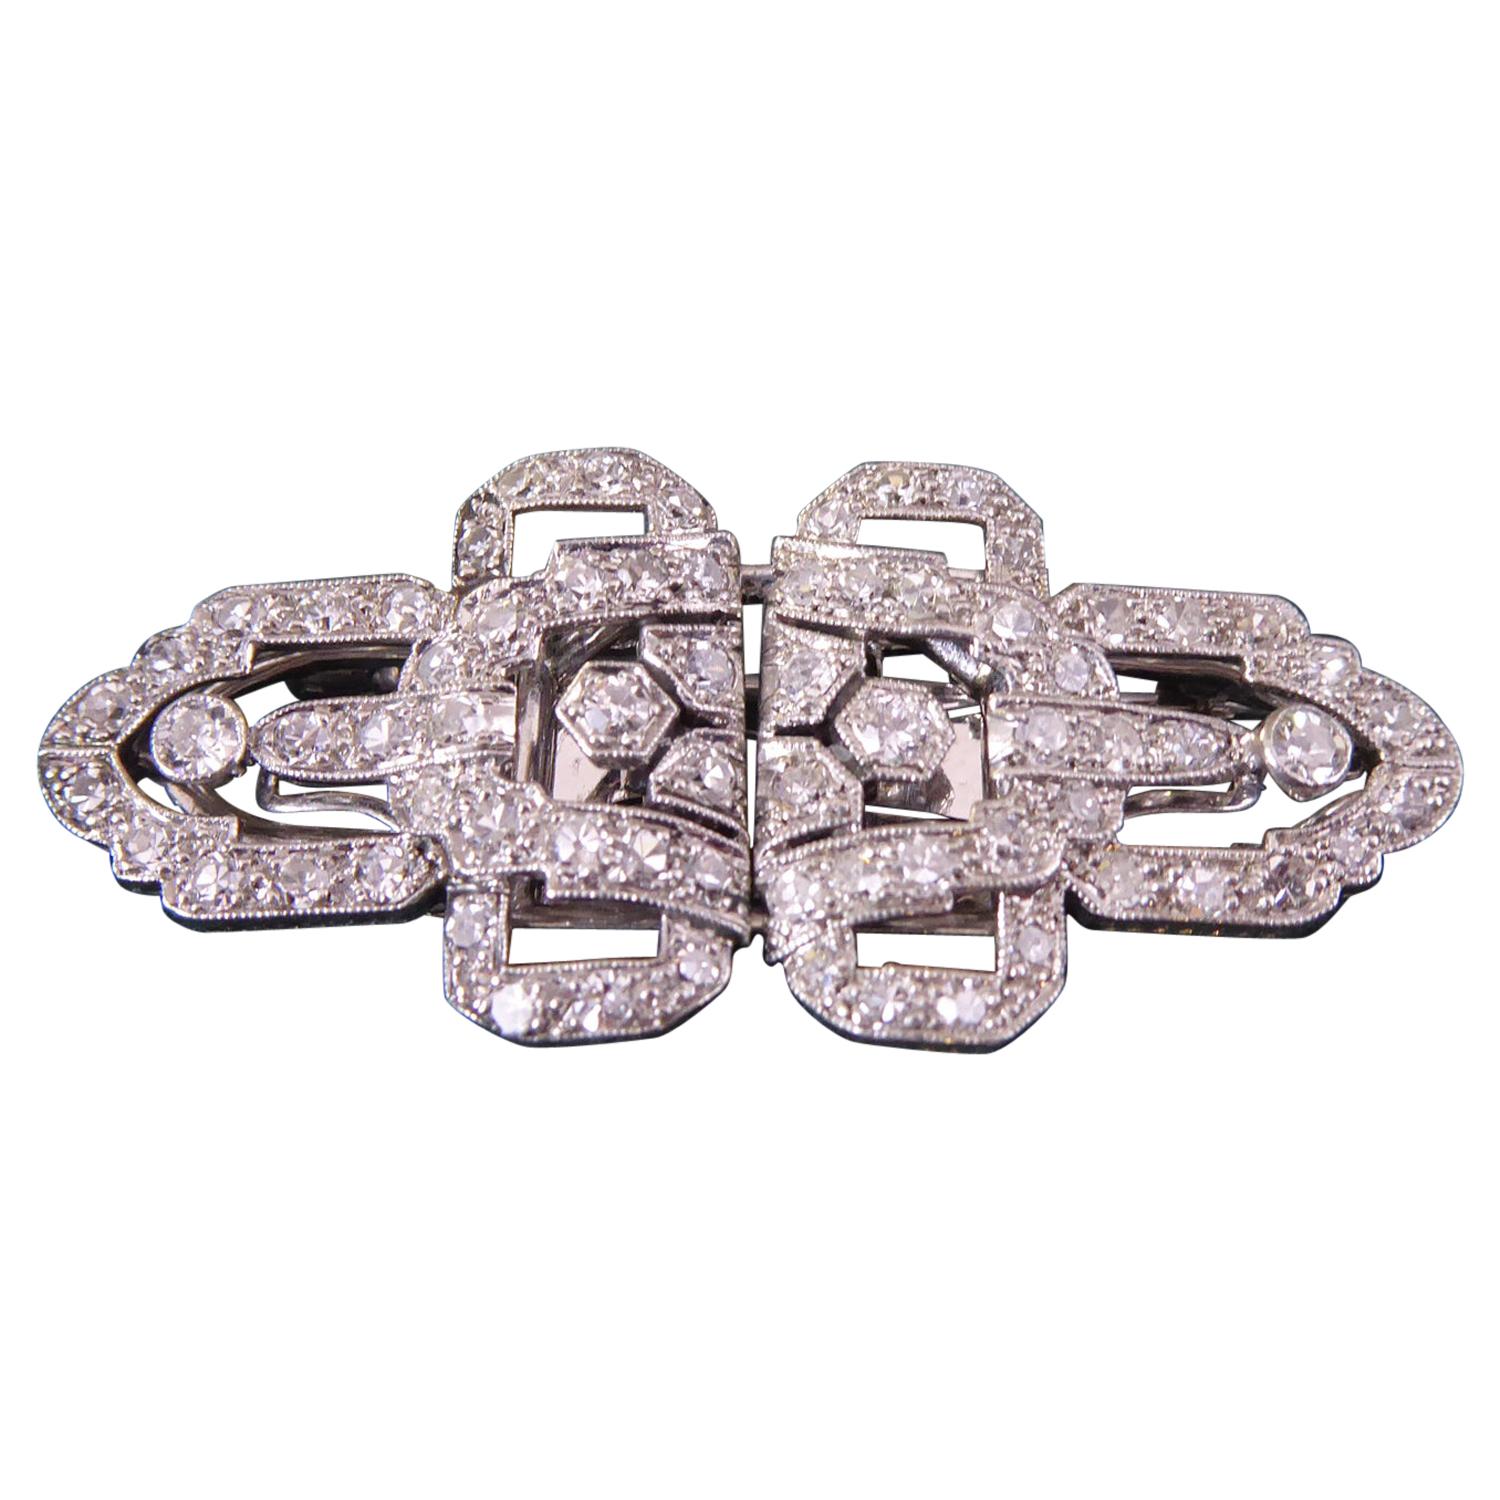 2.15 Carat Art Deco Diamond Double Clip Brooch Set in Platinum